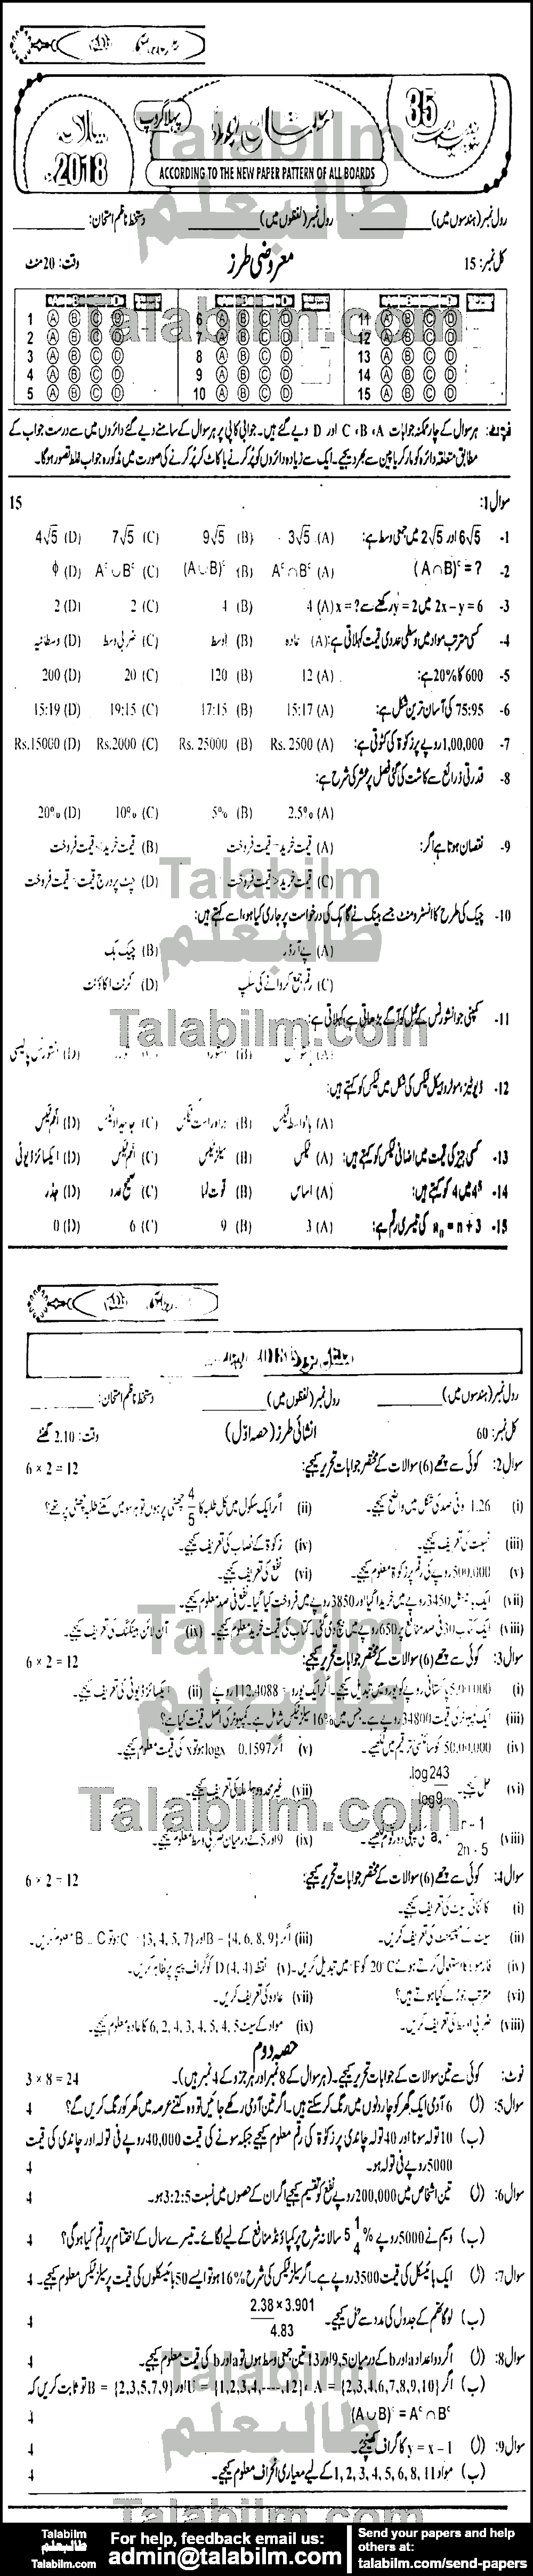 General Math 0 past paper for Urdu Medium 2018 Group-I